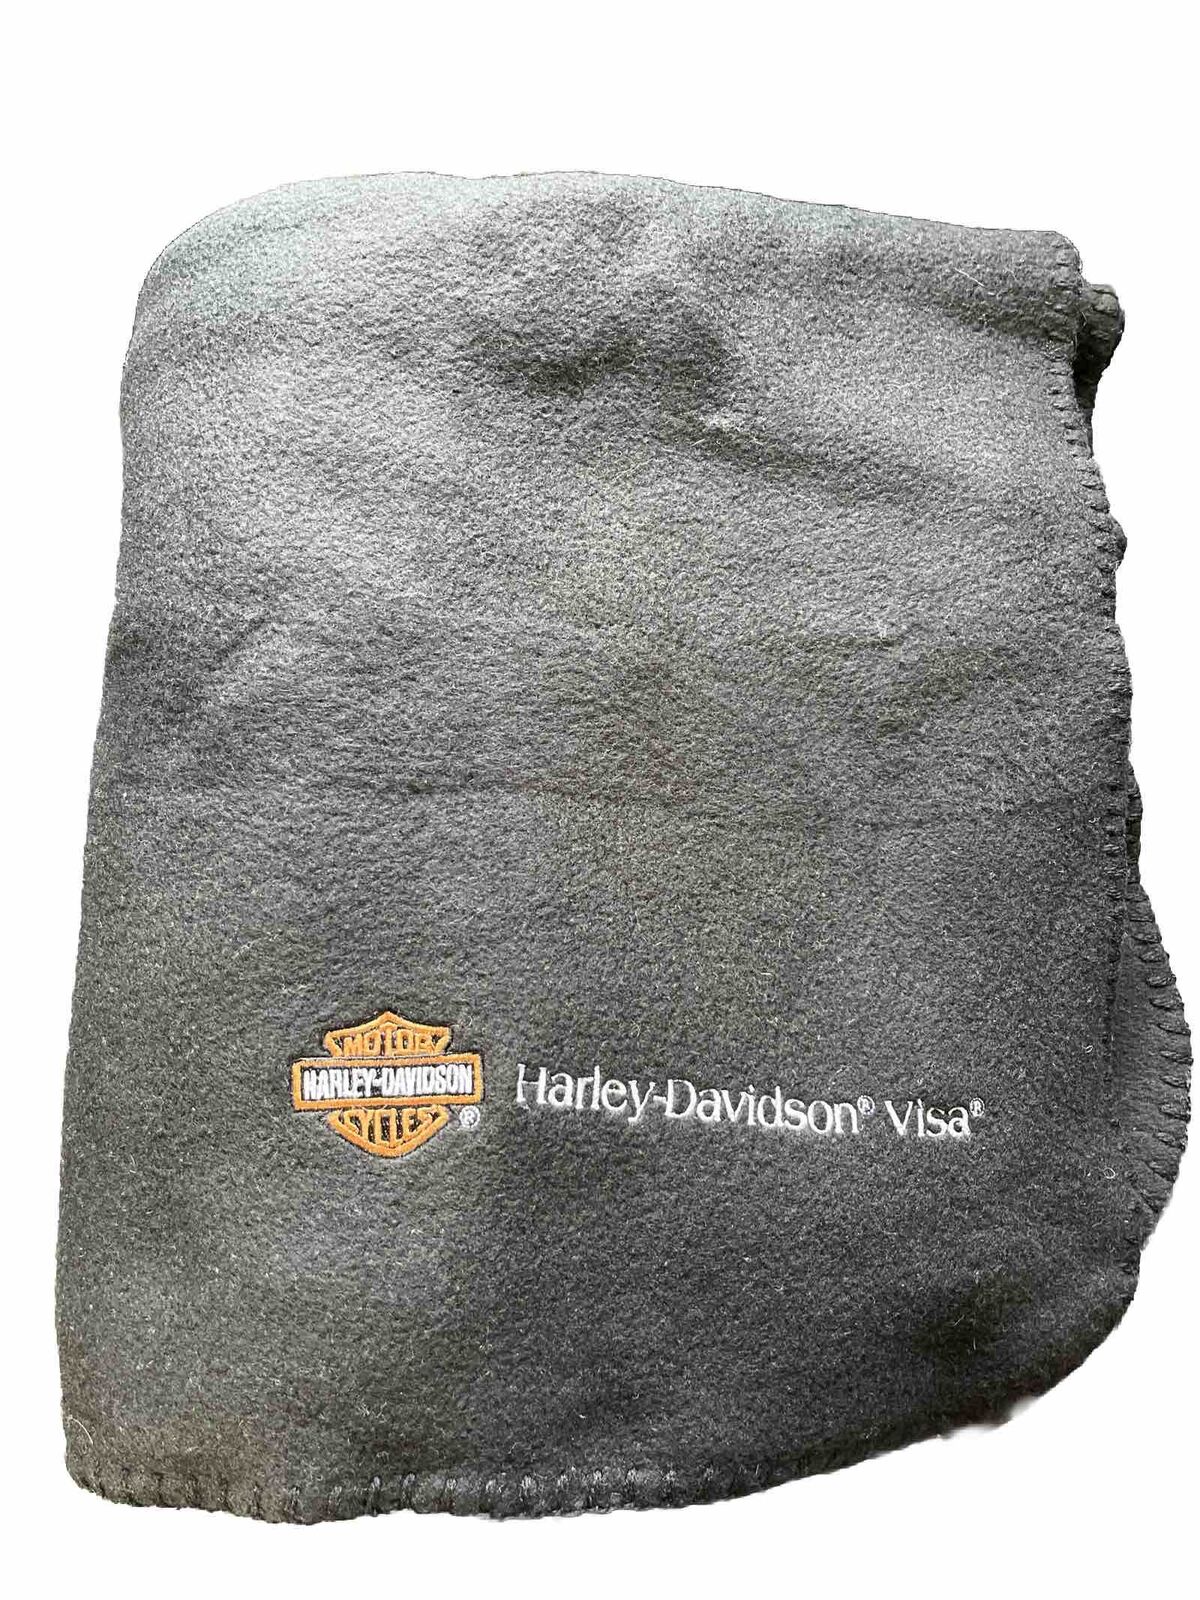 Harley Davidson Visa Fleece Throw Blanket Black Embroidery Stitched Edging